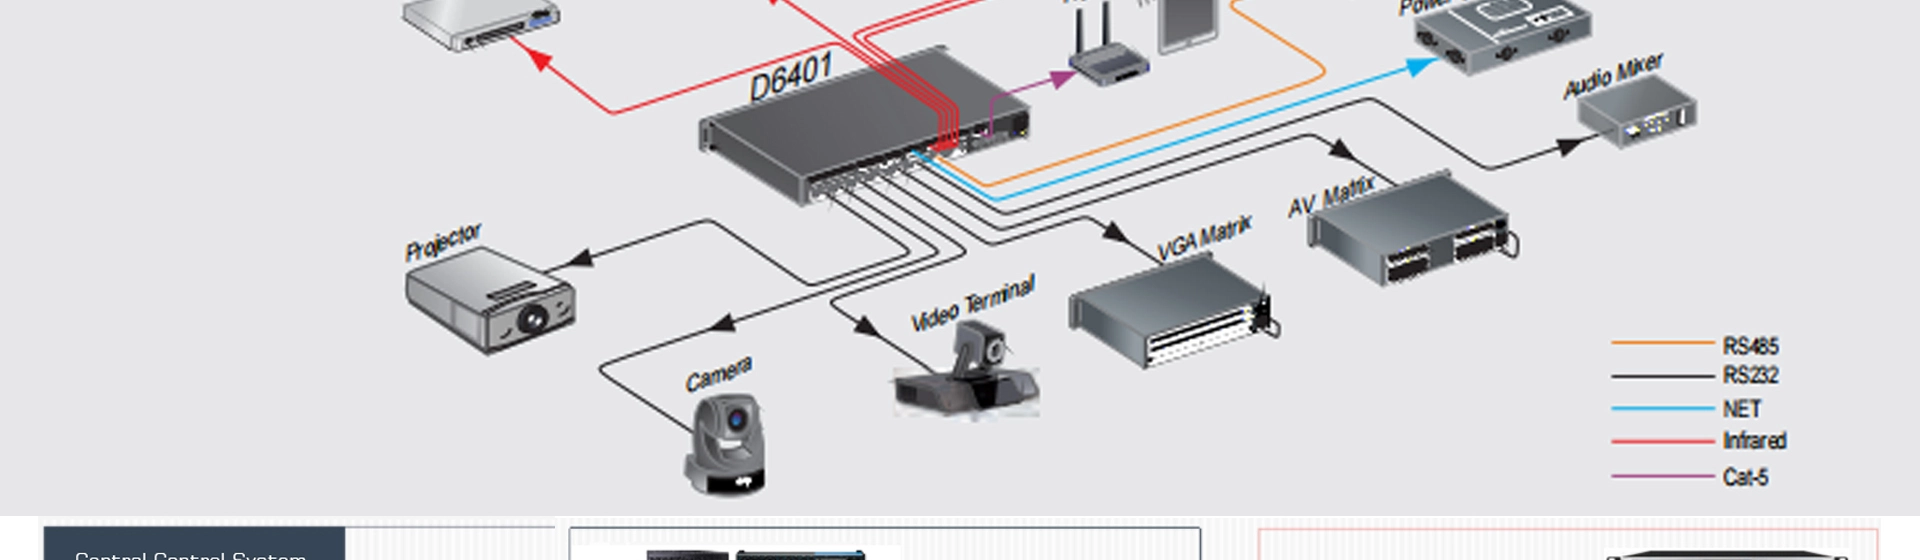 Host de control central multimedia de red programable